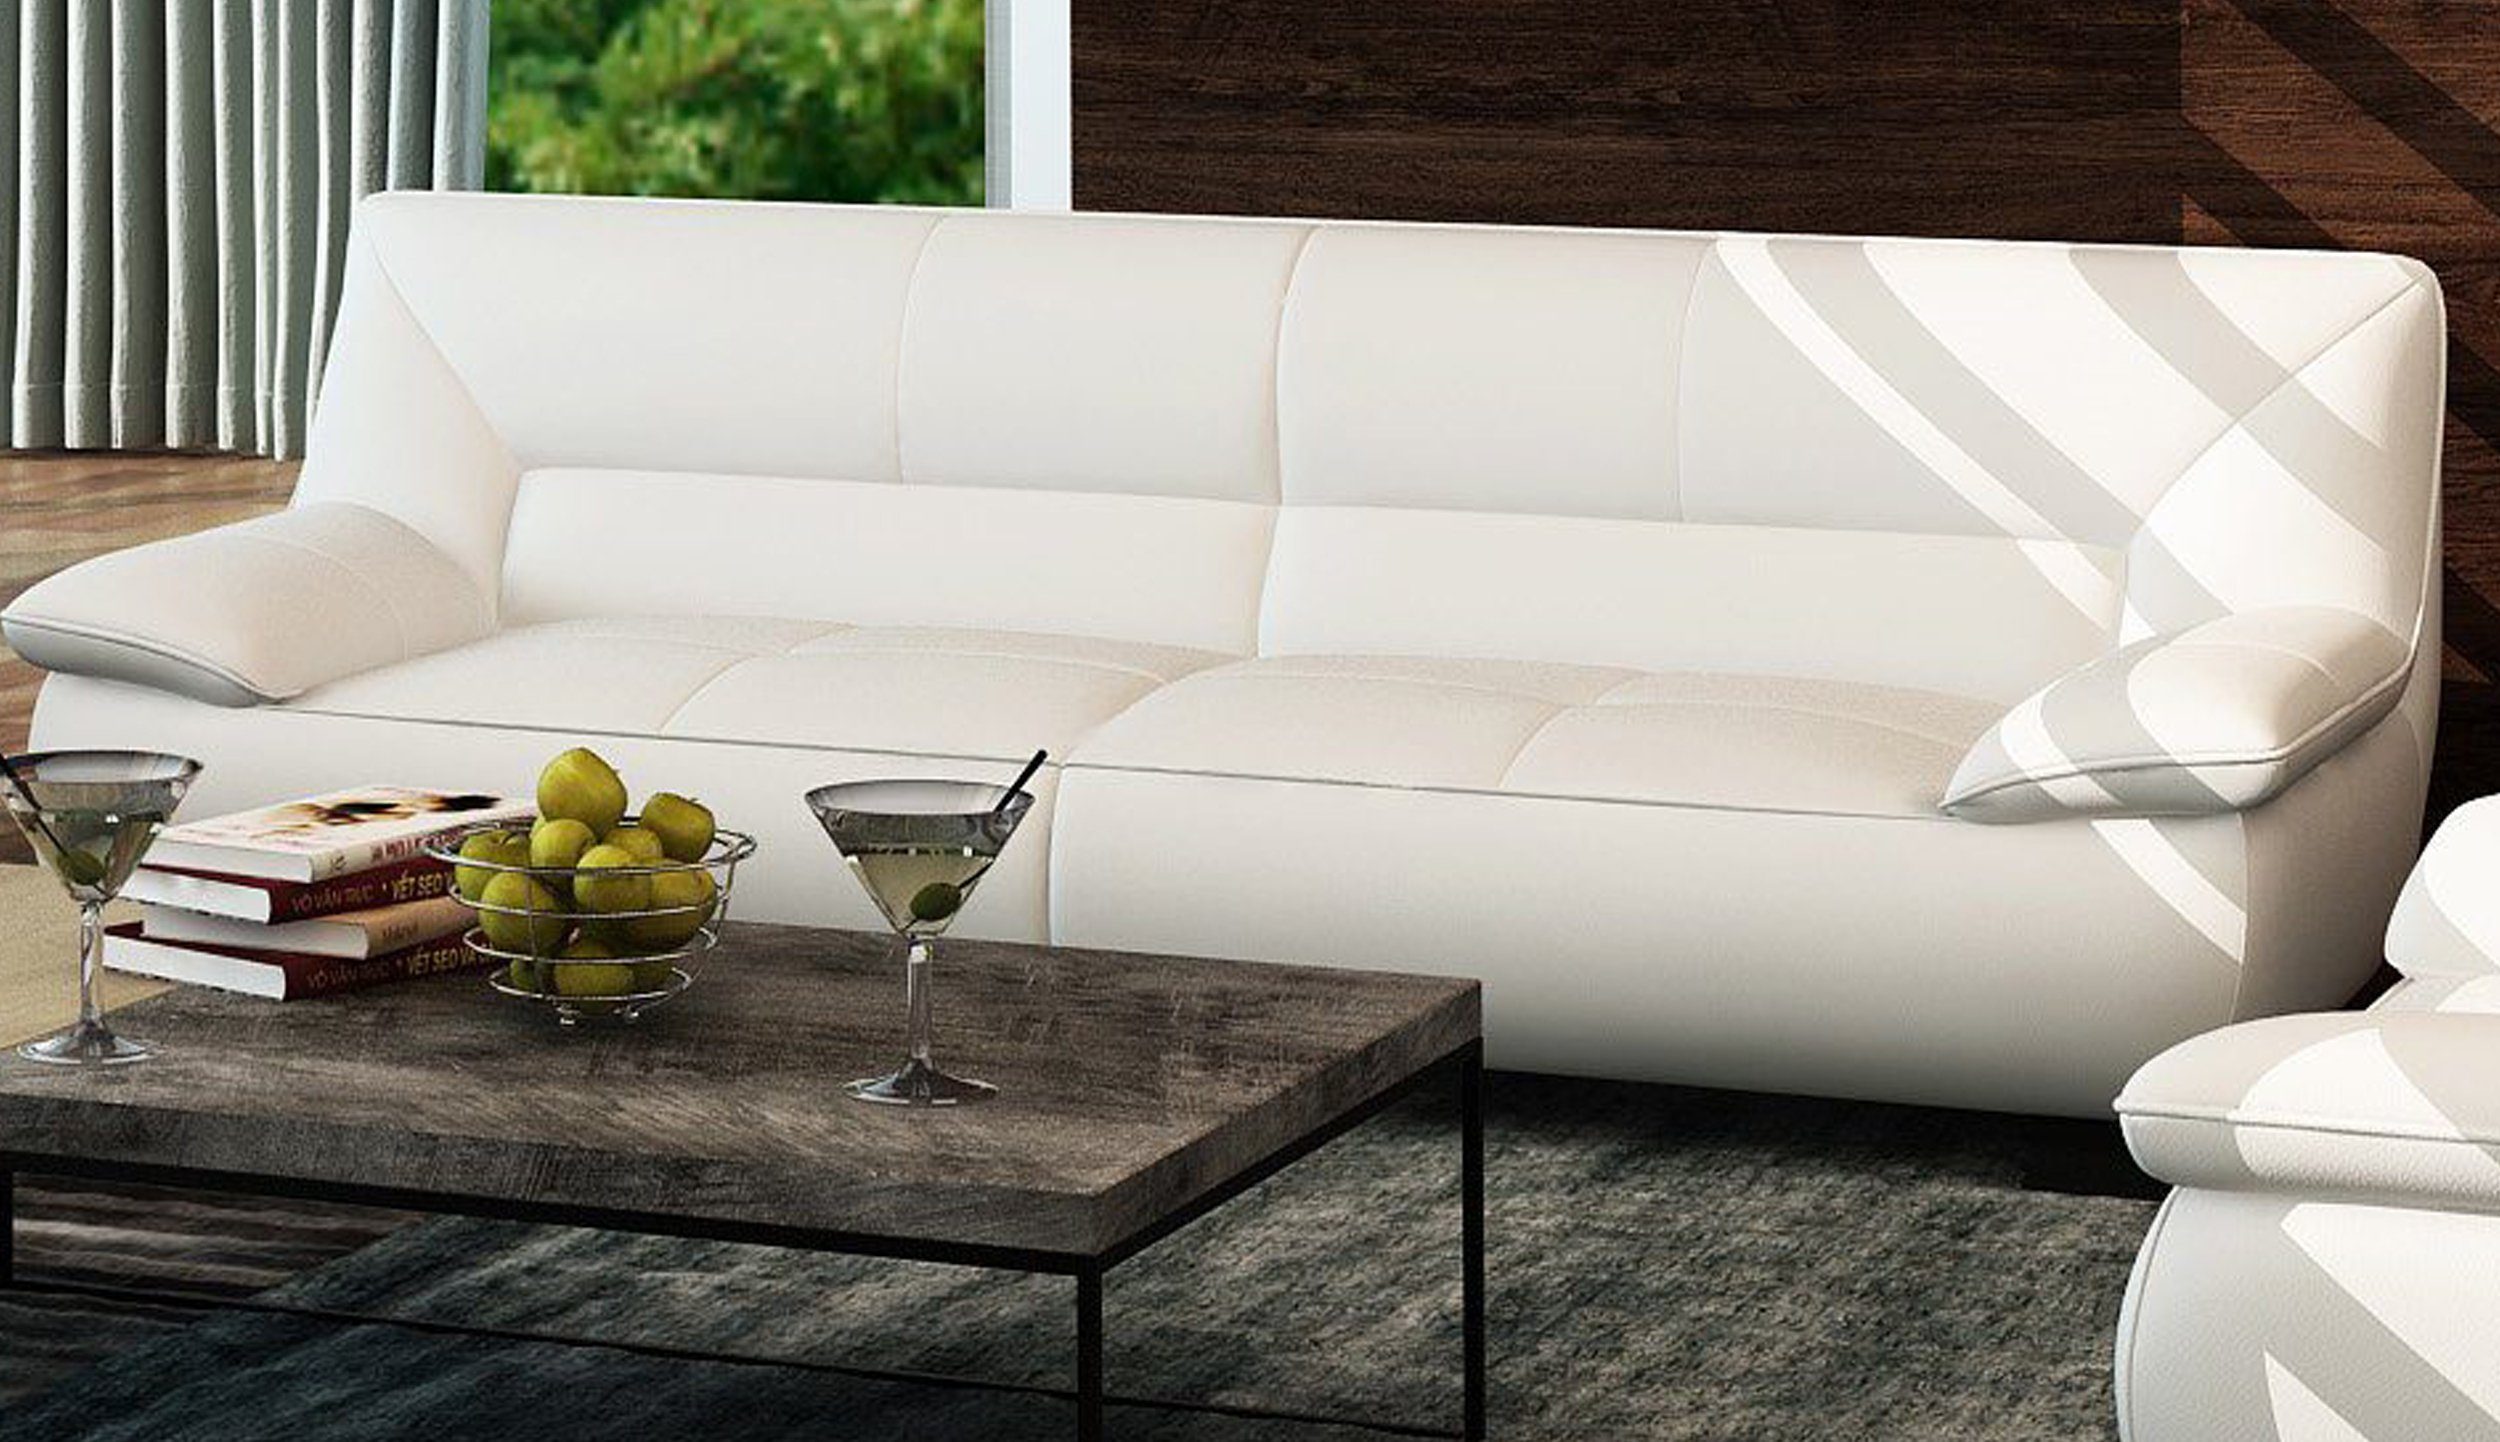 JVmoebel Sofa Graue Couch Polster 3 Sitzer Leder Sofas Couchen Sitz Design, Made in Europe